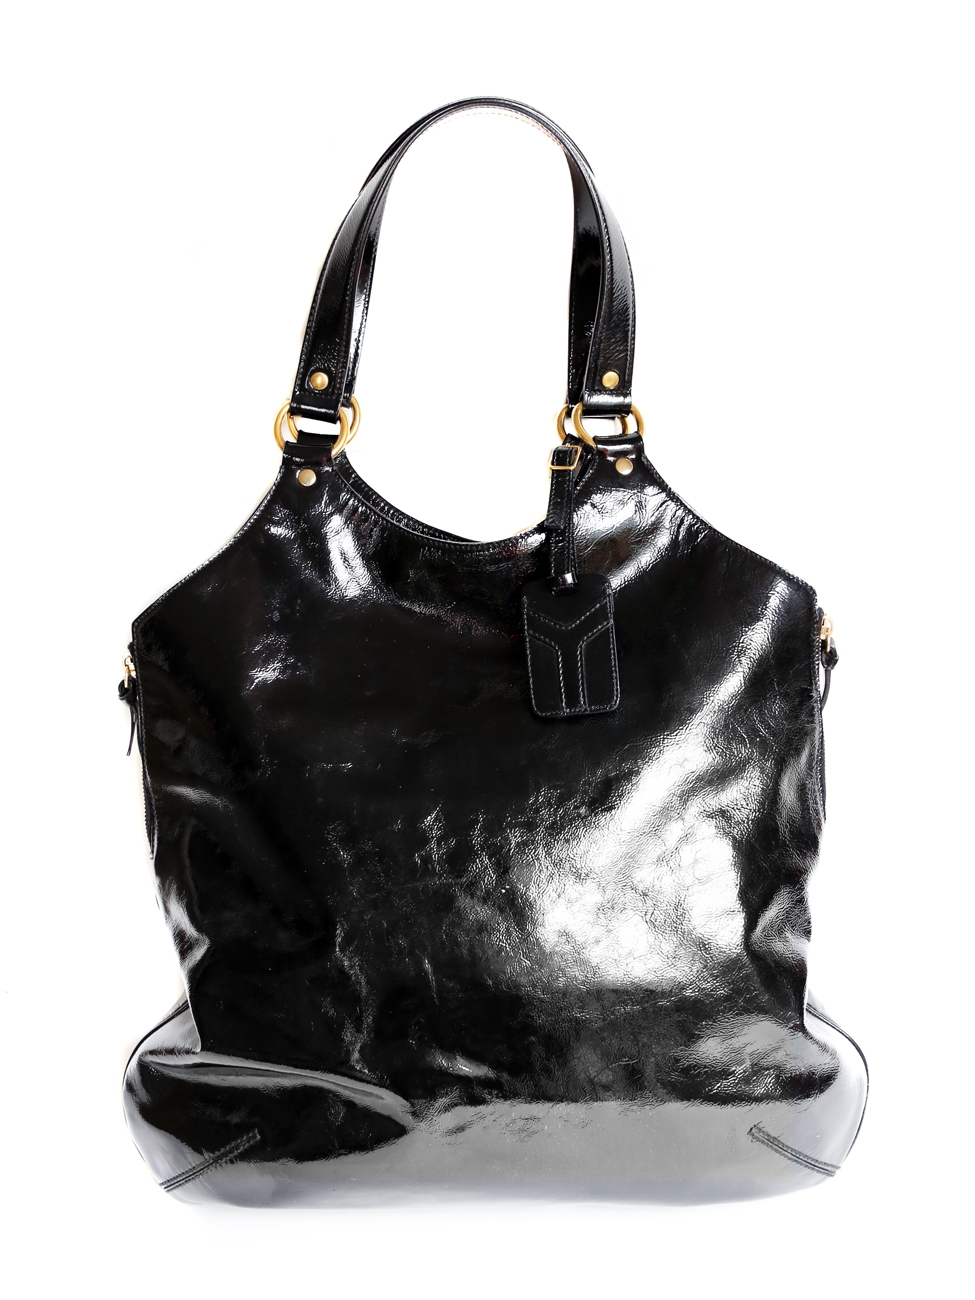 ysl gold leather handbag tribute  